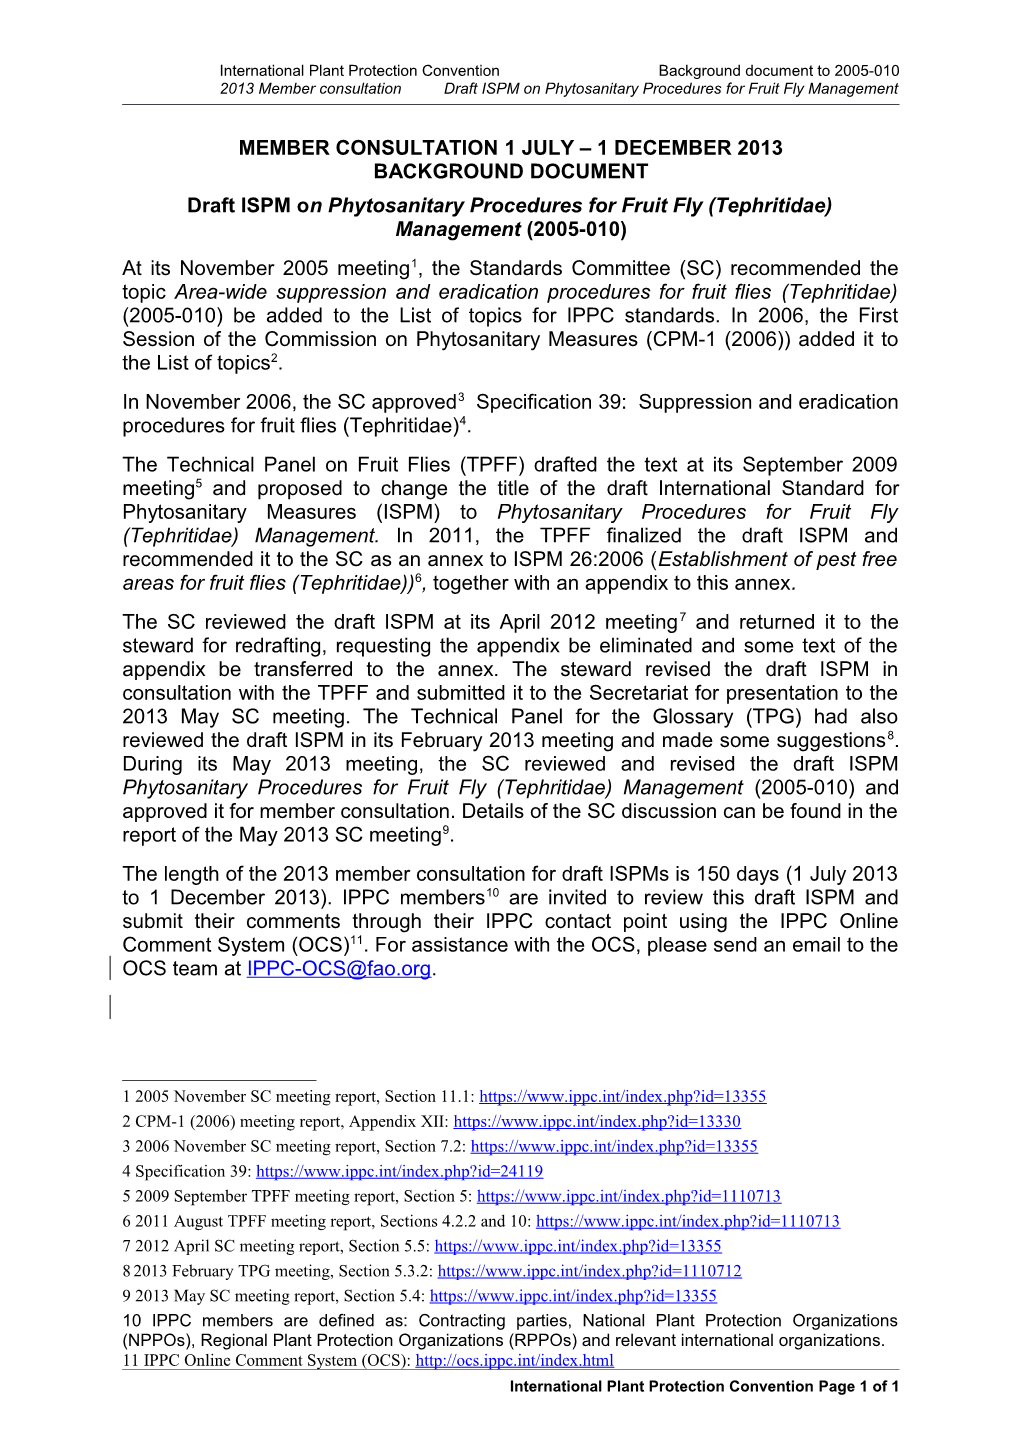 Draft ISPM on Phytosanitary Procedures for Fruit Fly (Tephritidae) Management (2005-010)